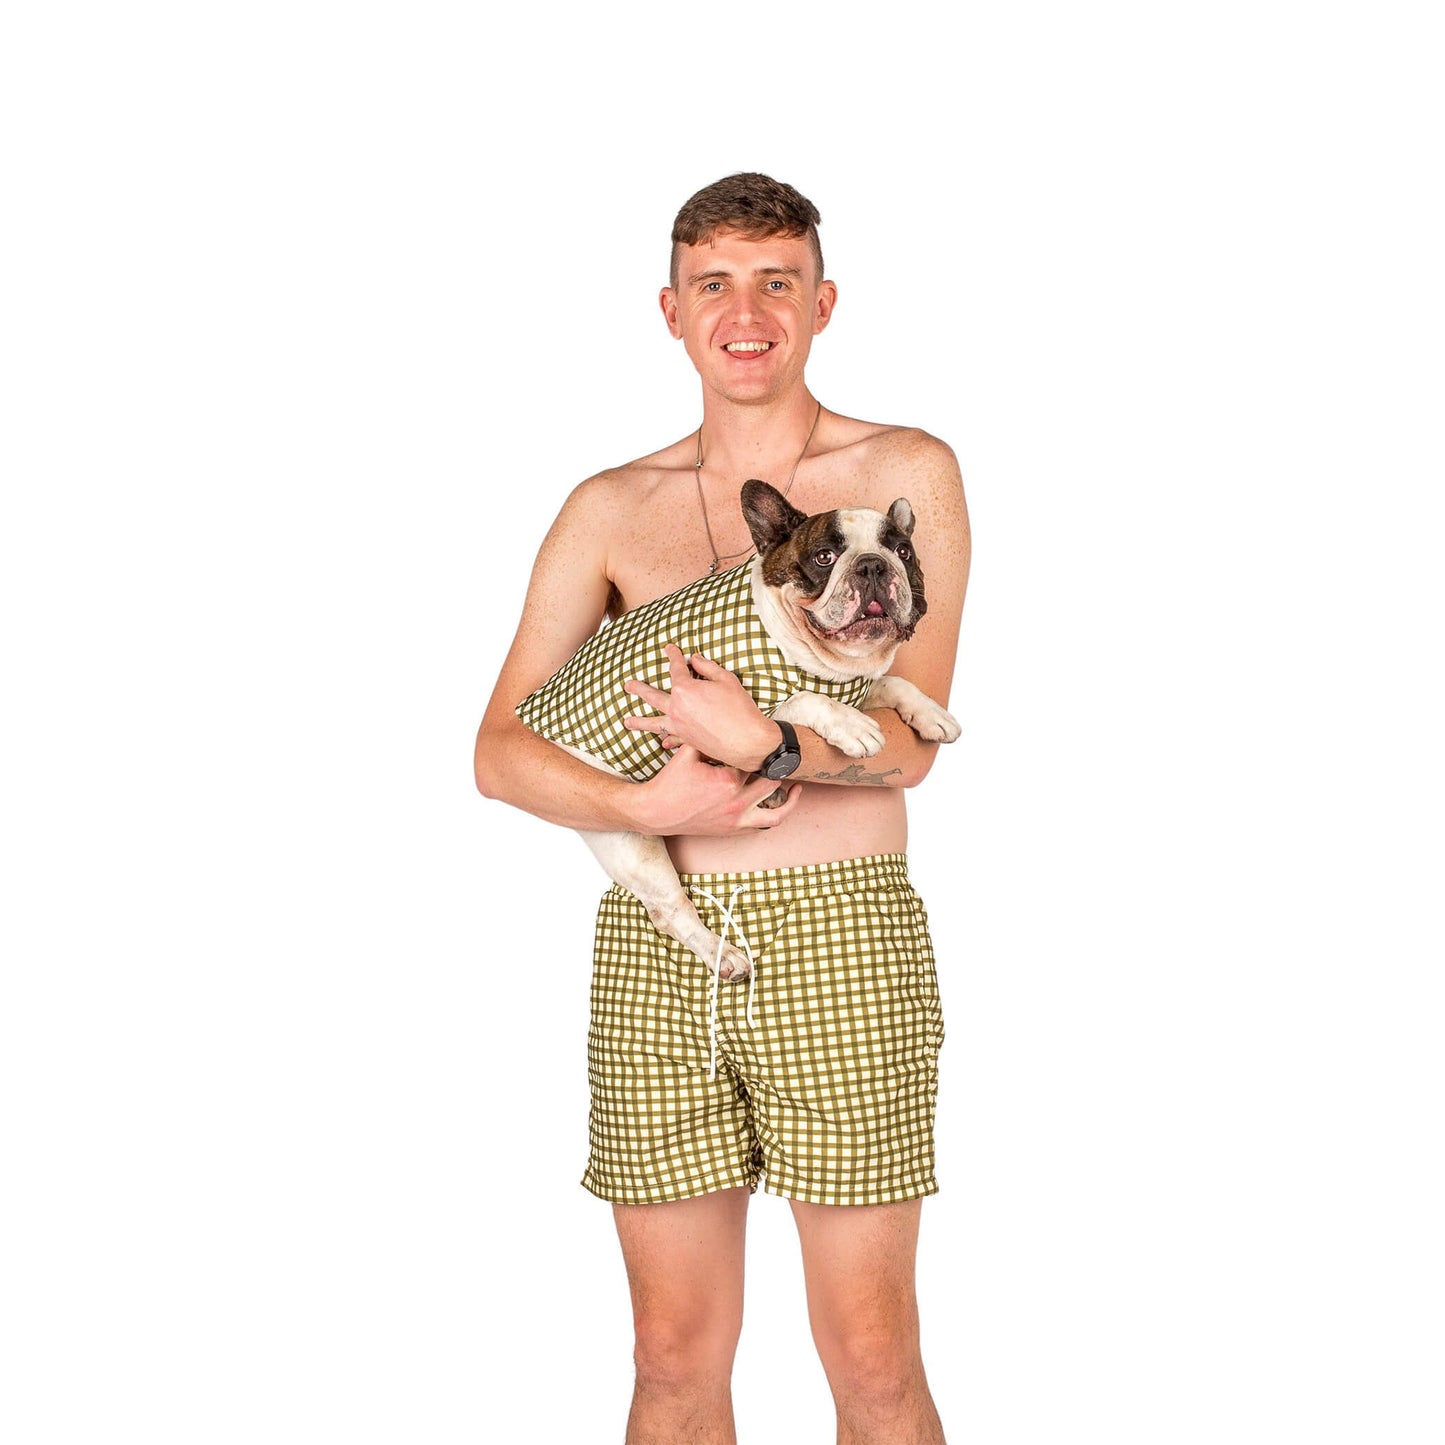 A French Bulldog and Male model looking fowards wearing Vibrant Hounds Green Gingham Rash shirt and human swimwear.